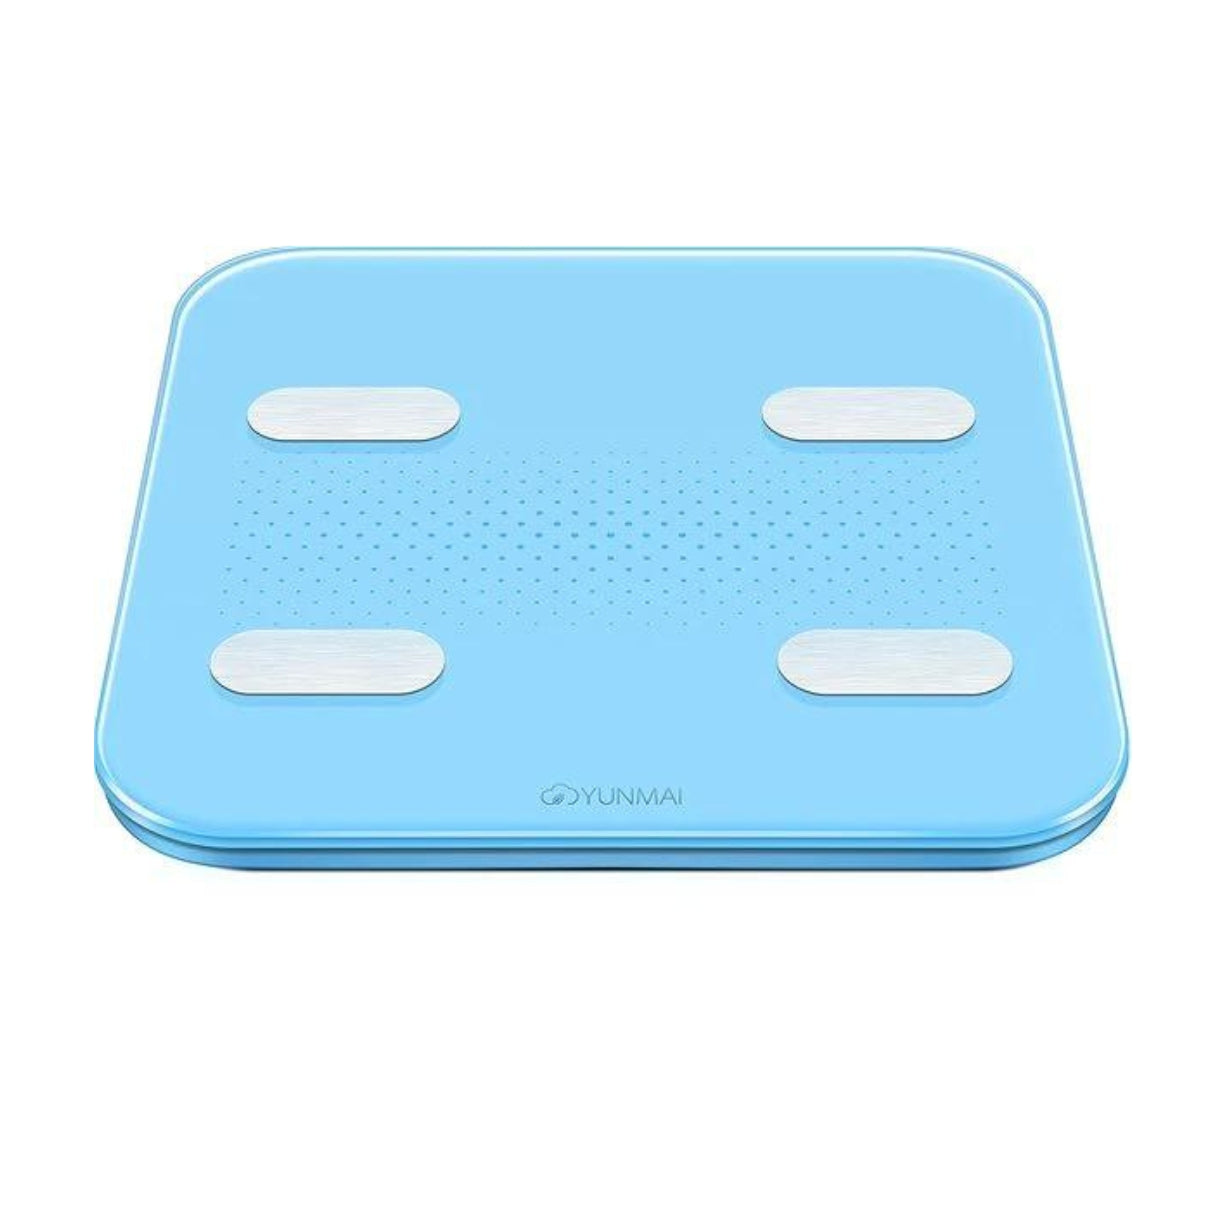 Yunmai Mini Bluetooth Smart Bathroom Scale - Blue